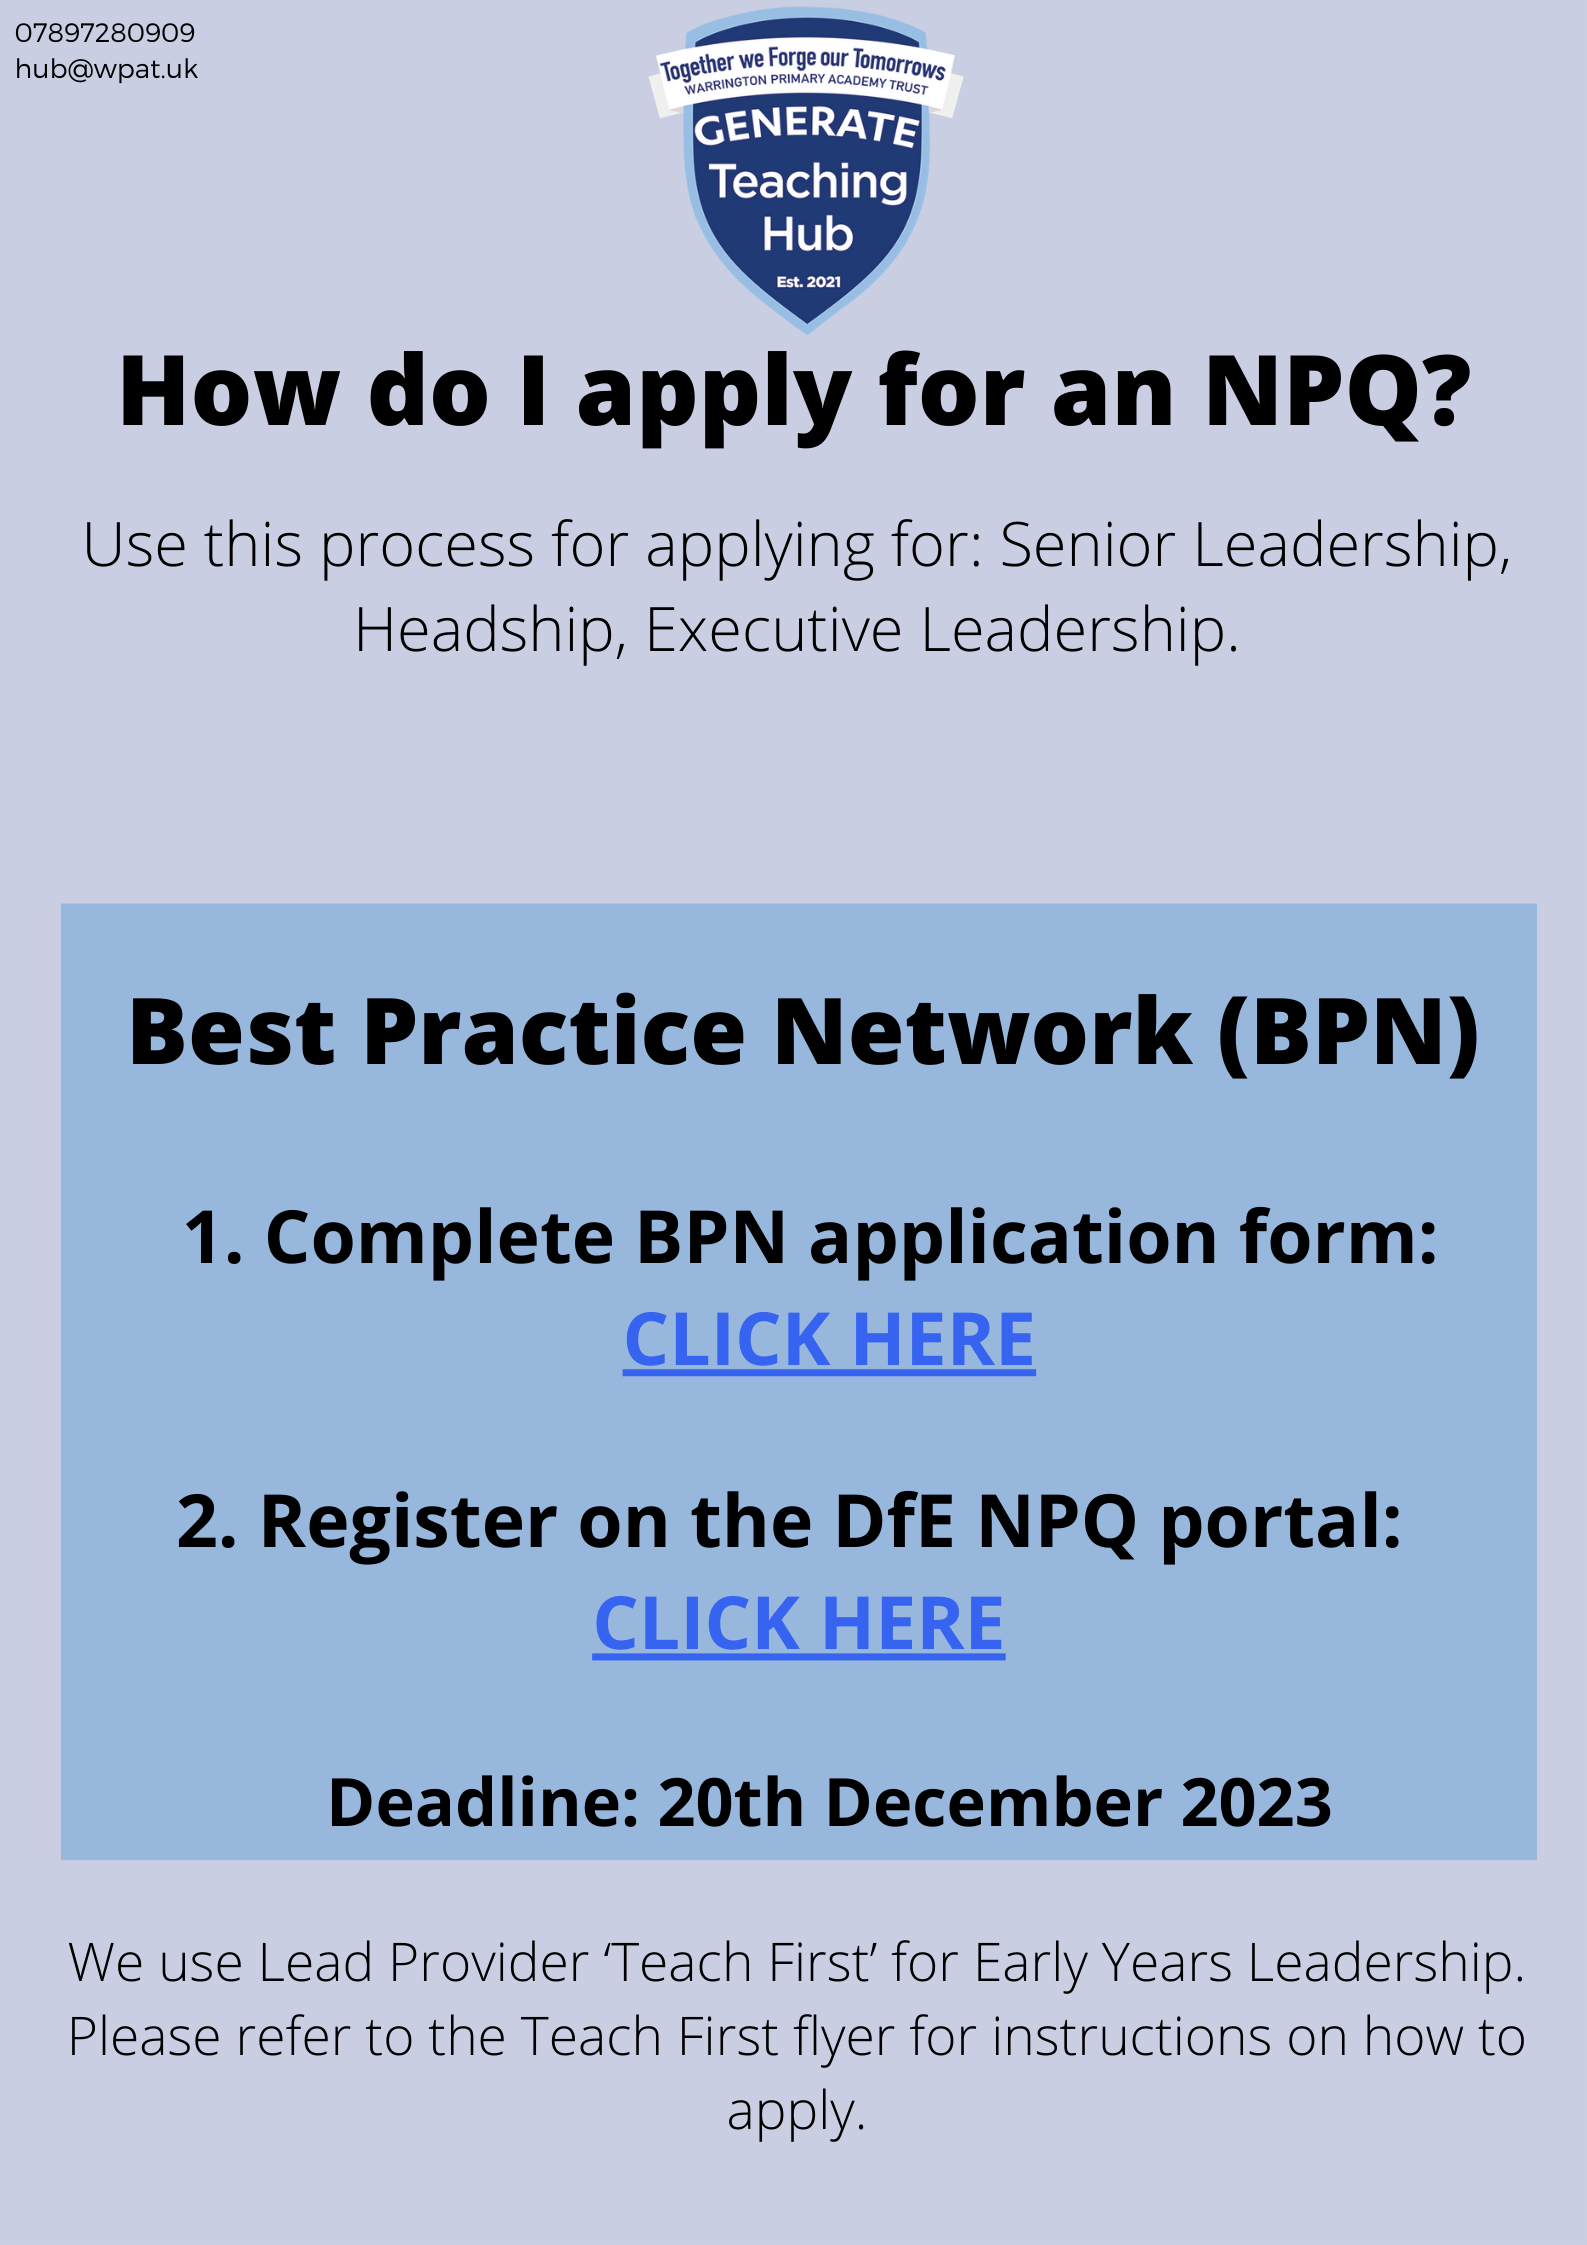 Leadership NPQs from Best Practice Network